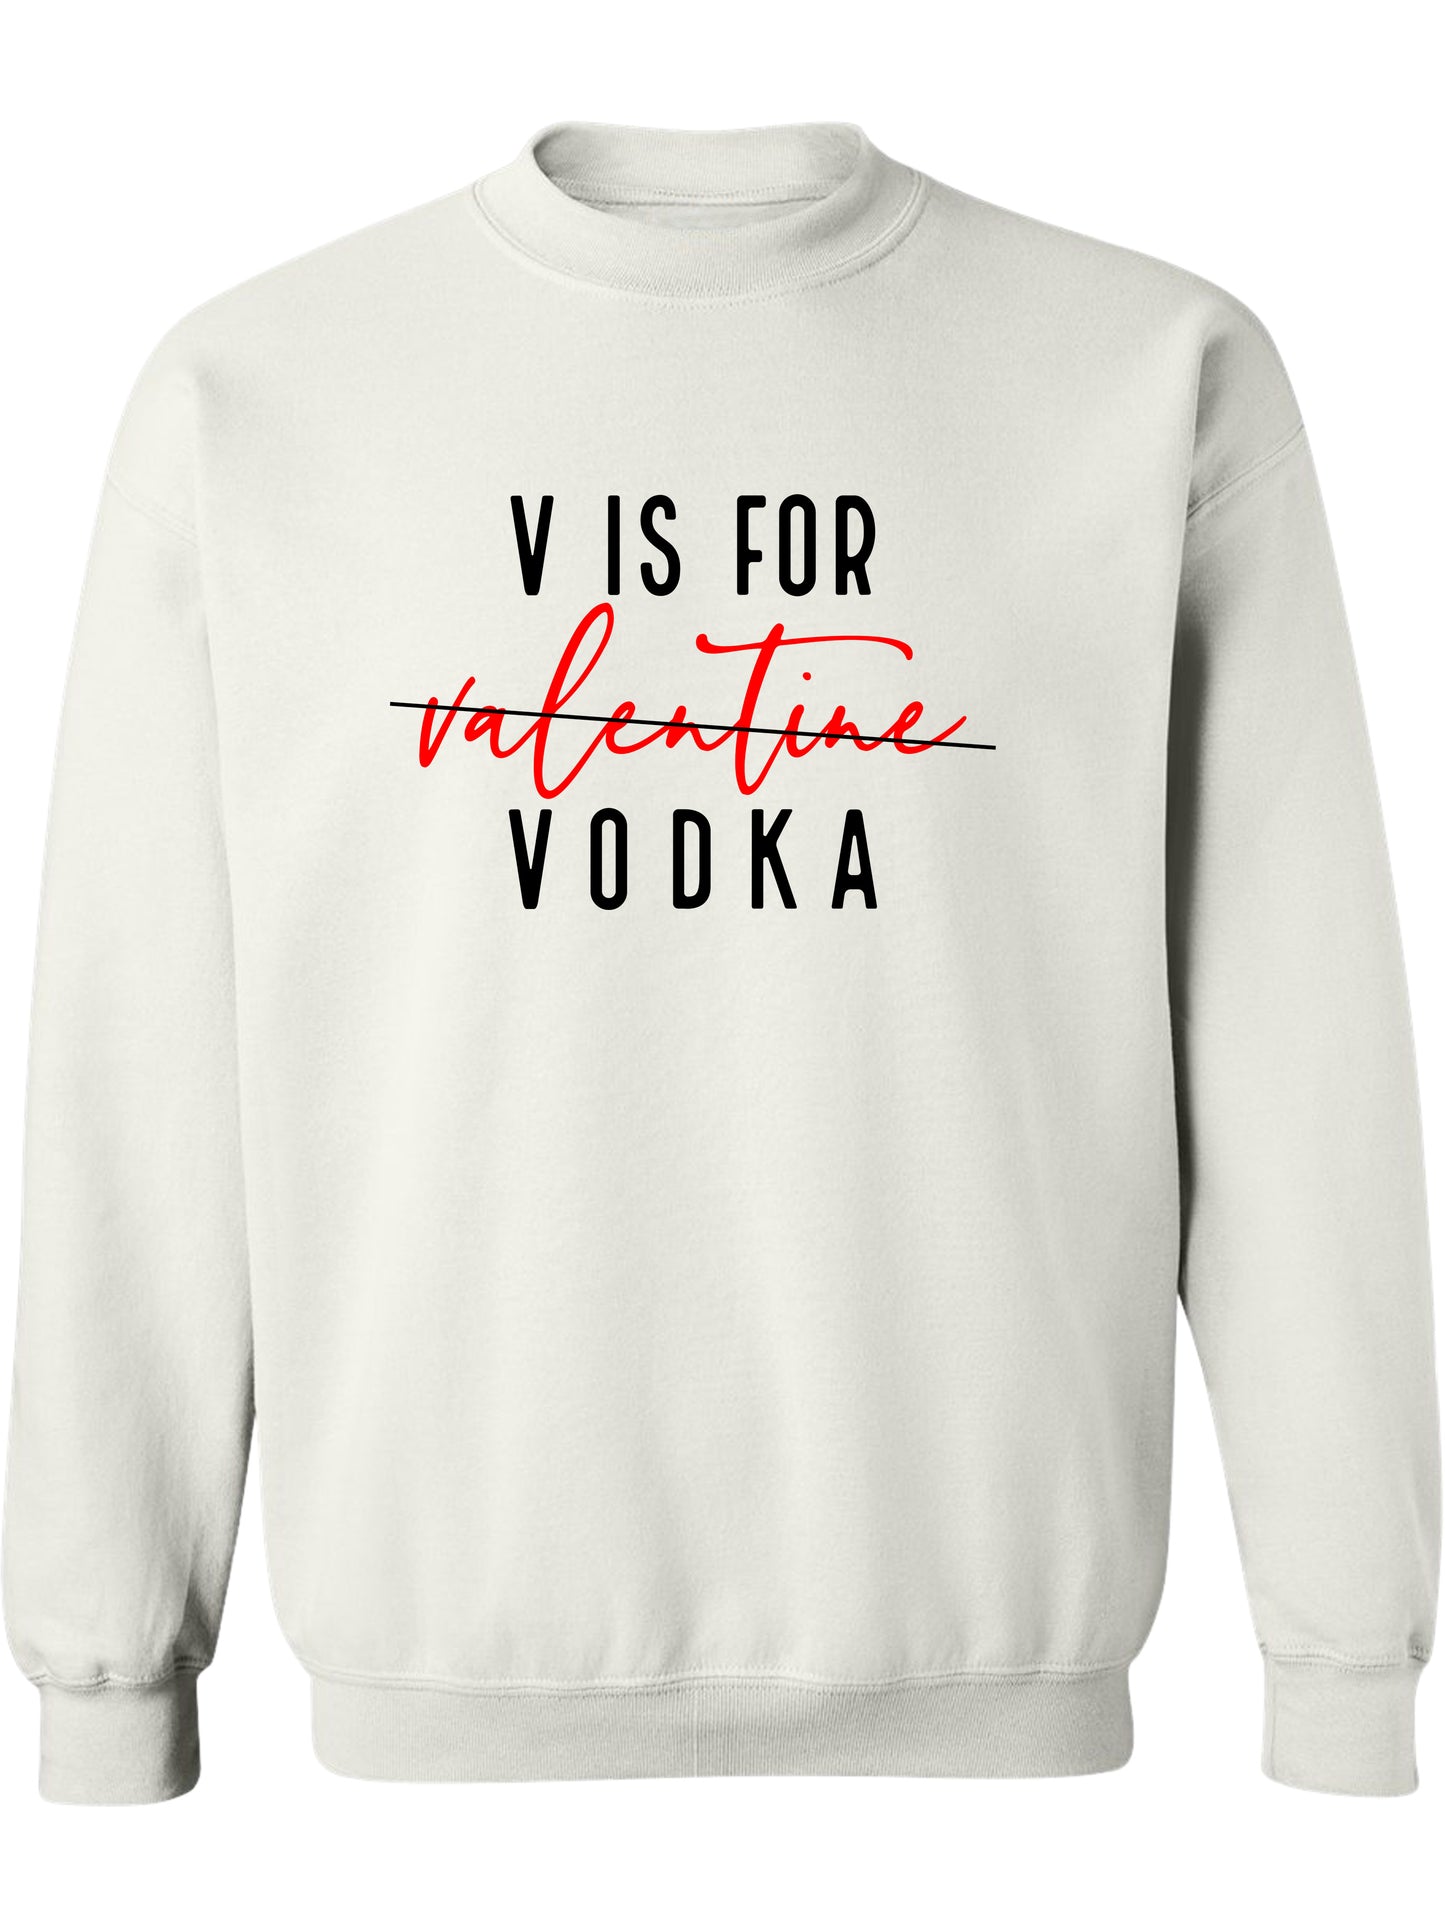 V is for Vodka - Valentine - Crewneck Relaxed Fit Sweatshrit